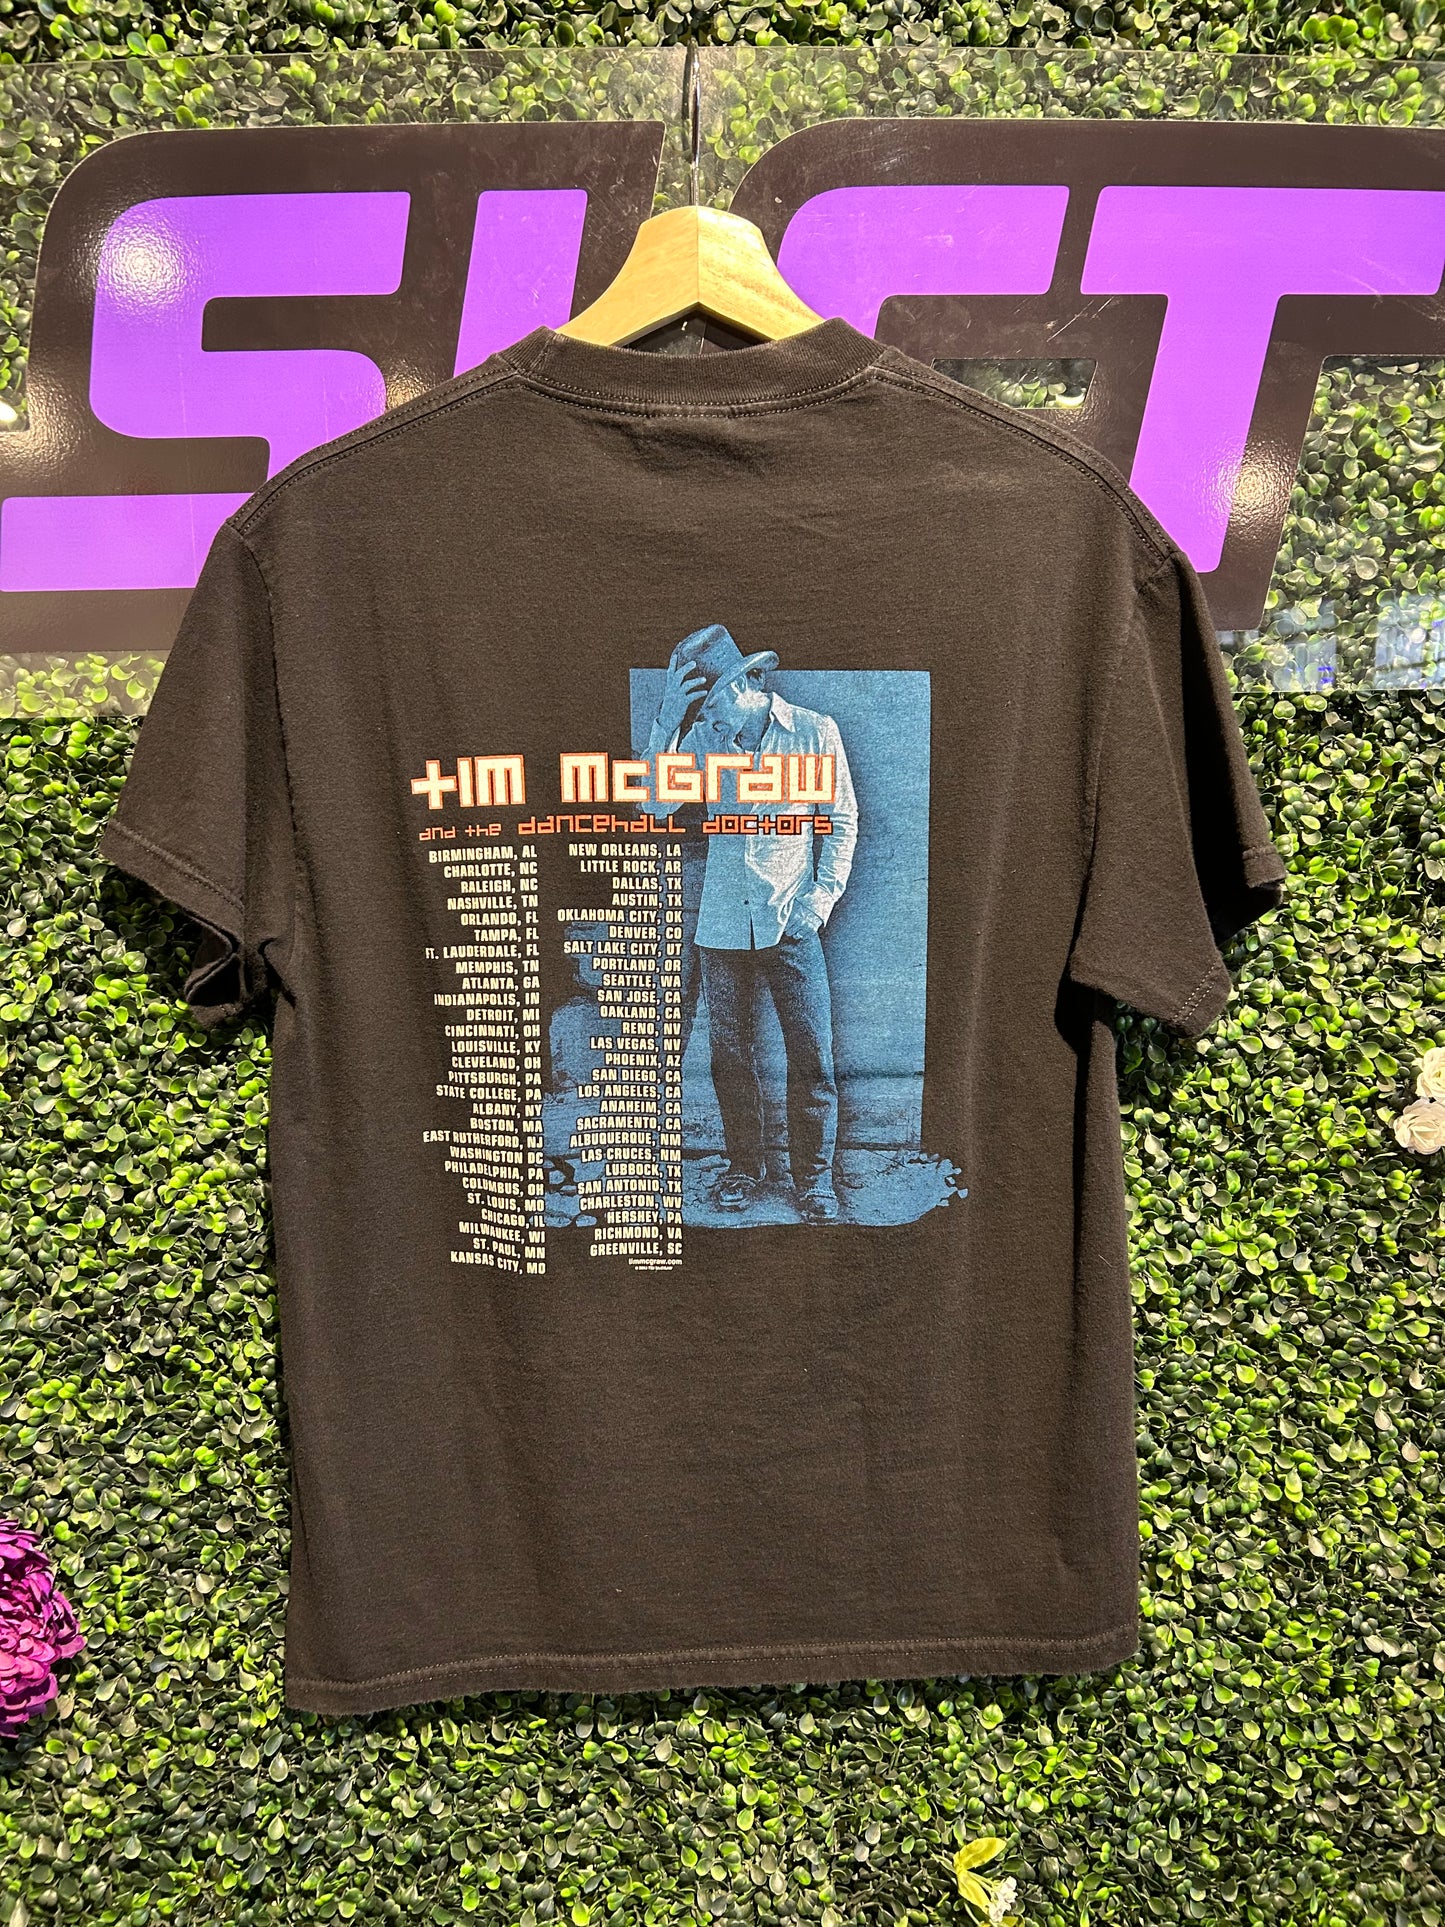 2003 Tim McGraw Tour T-Shirt. Size Medium